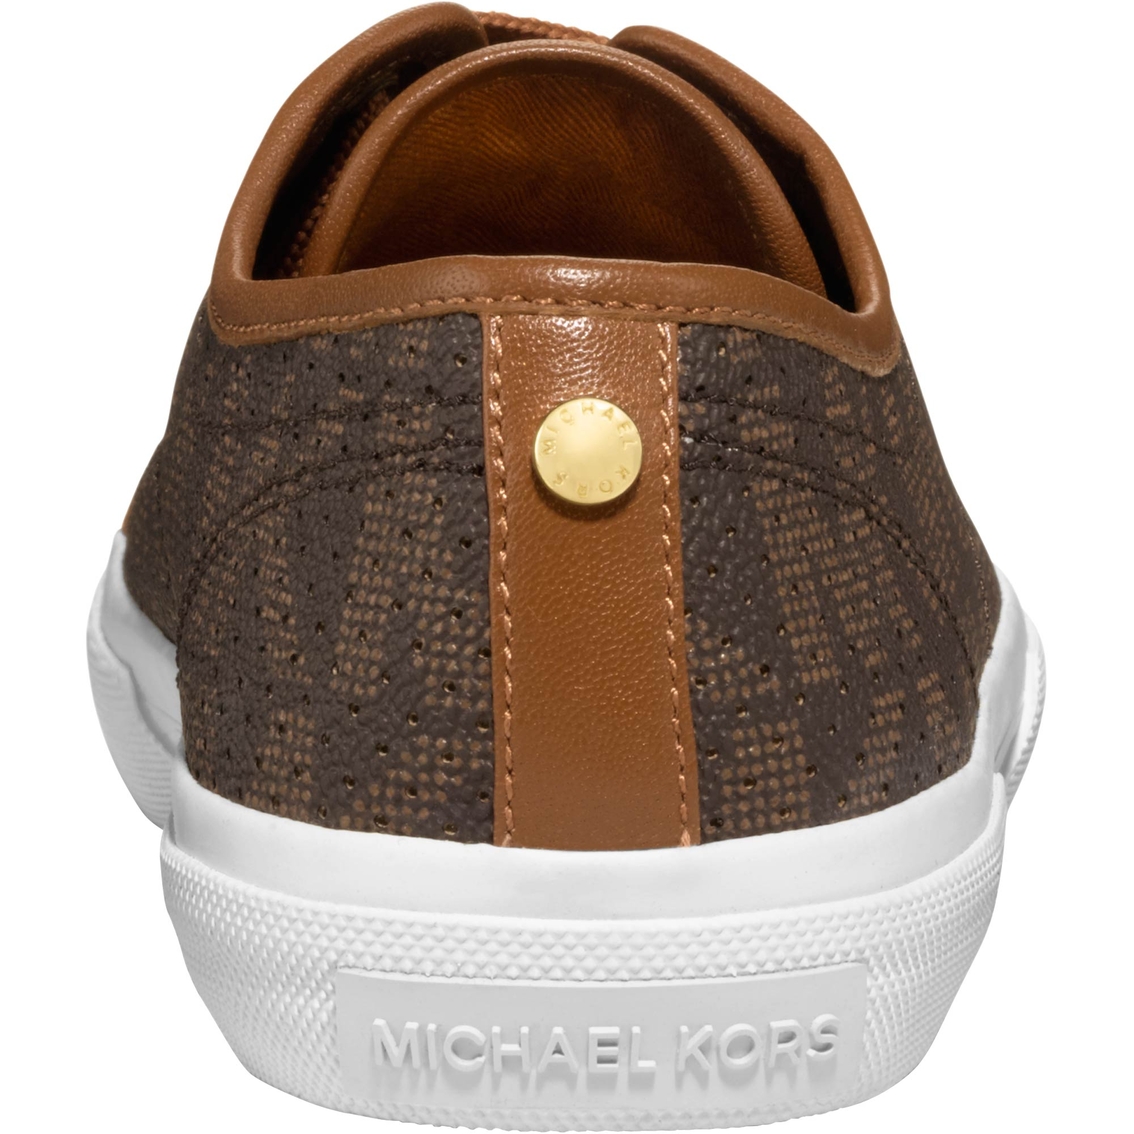 Patronise Peck Henholdsvis Michael Kors Women's Boerum Sneakers | Atg Archive | Shop The Exchange